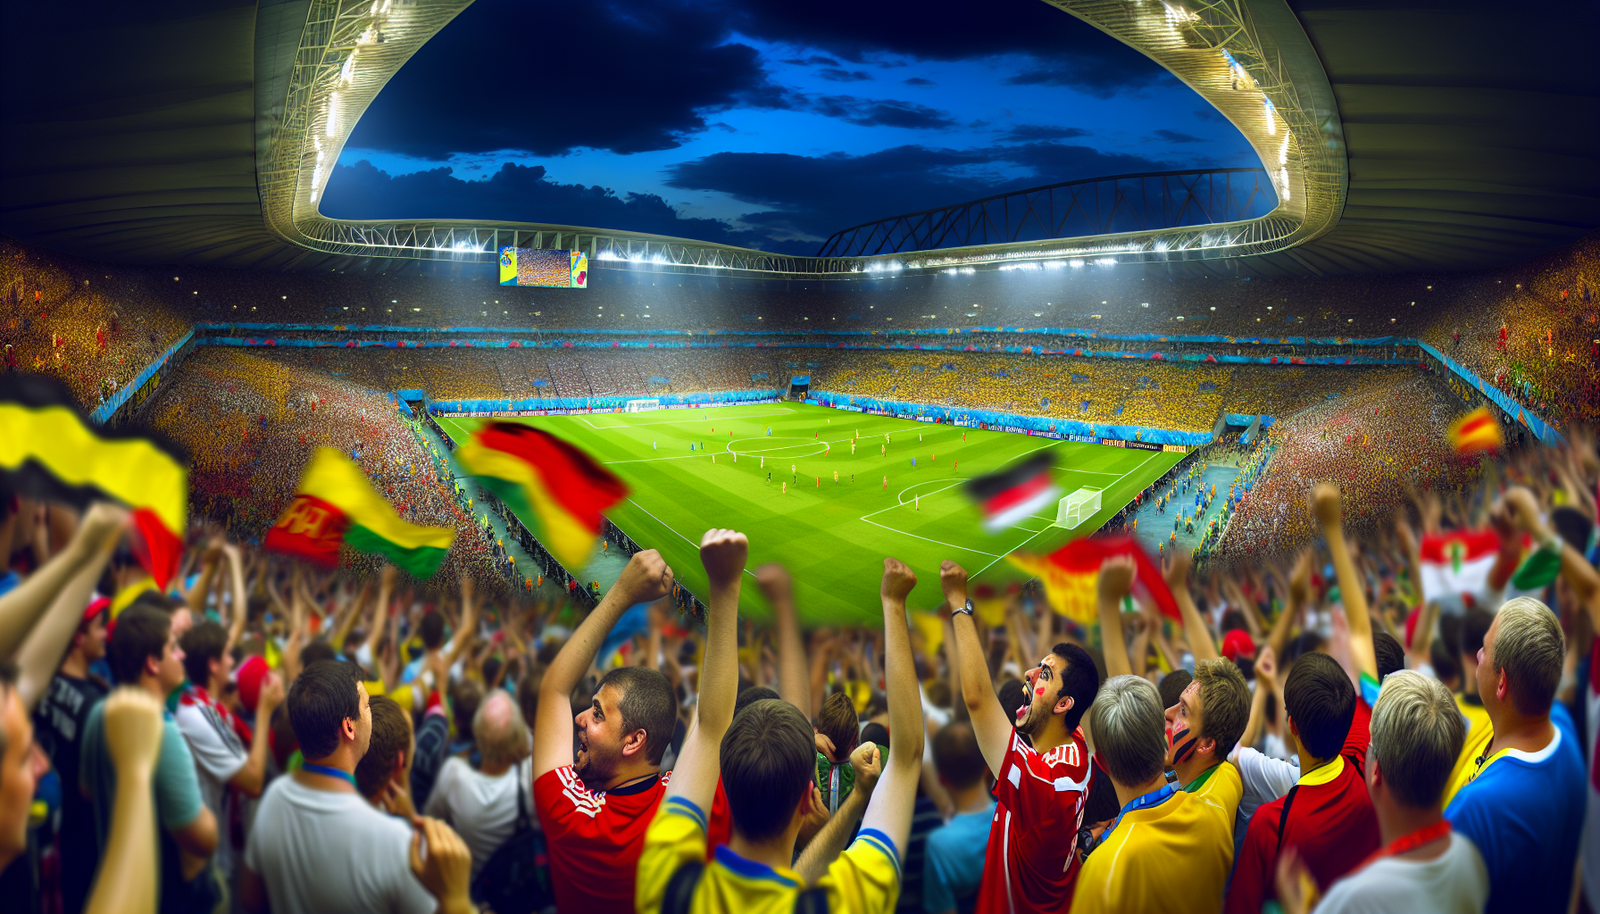 Soccer fans cheering in a stadium